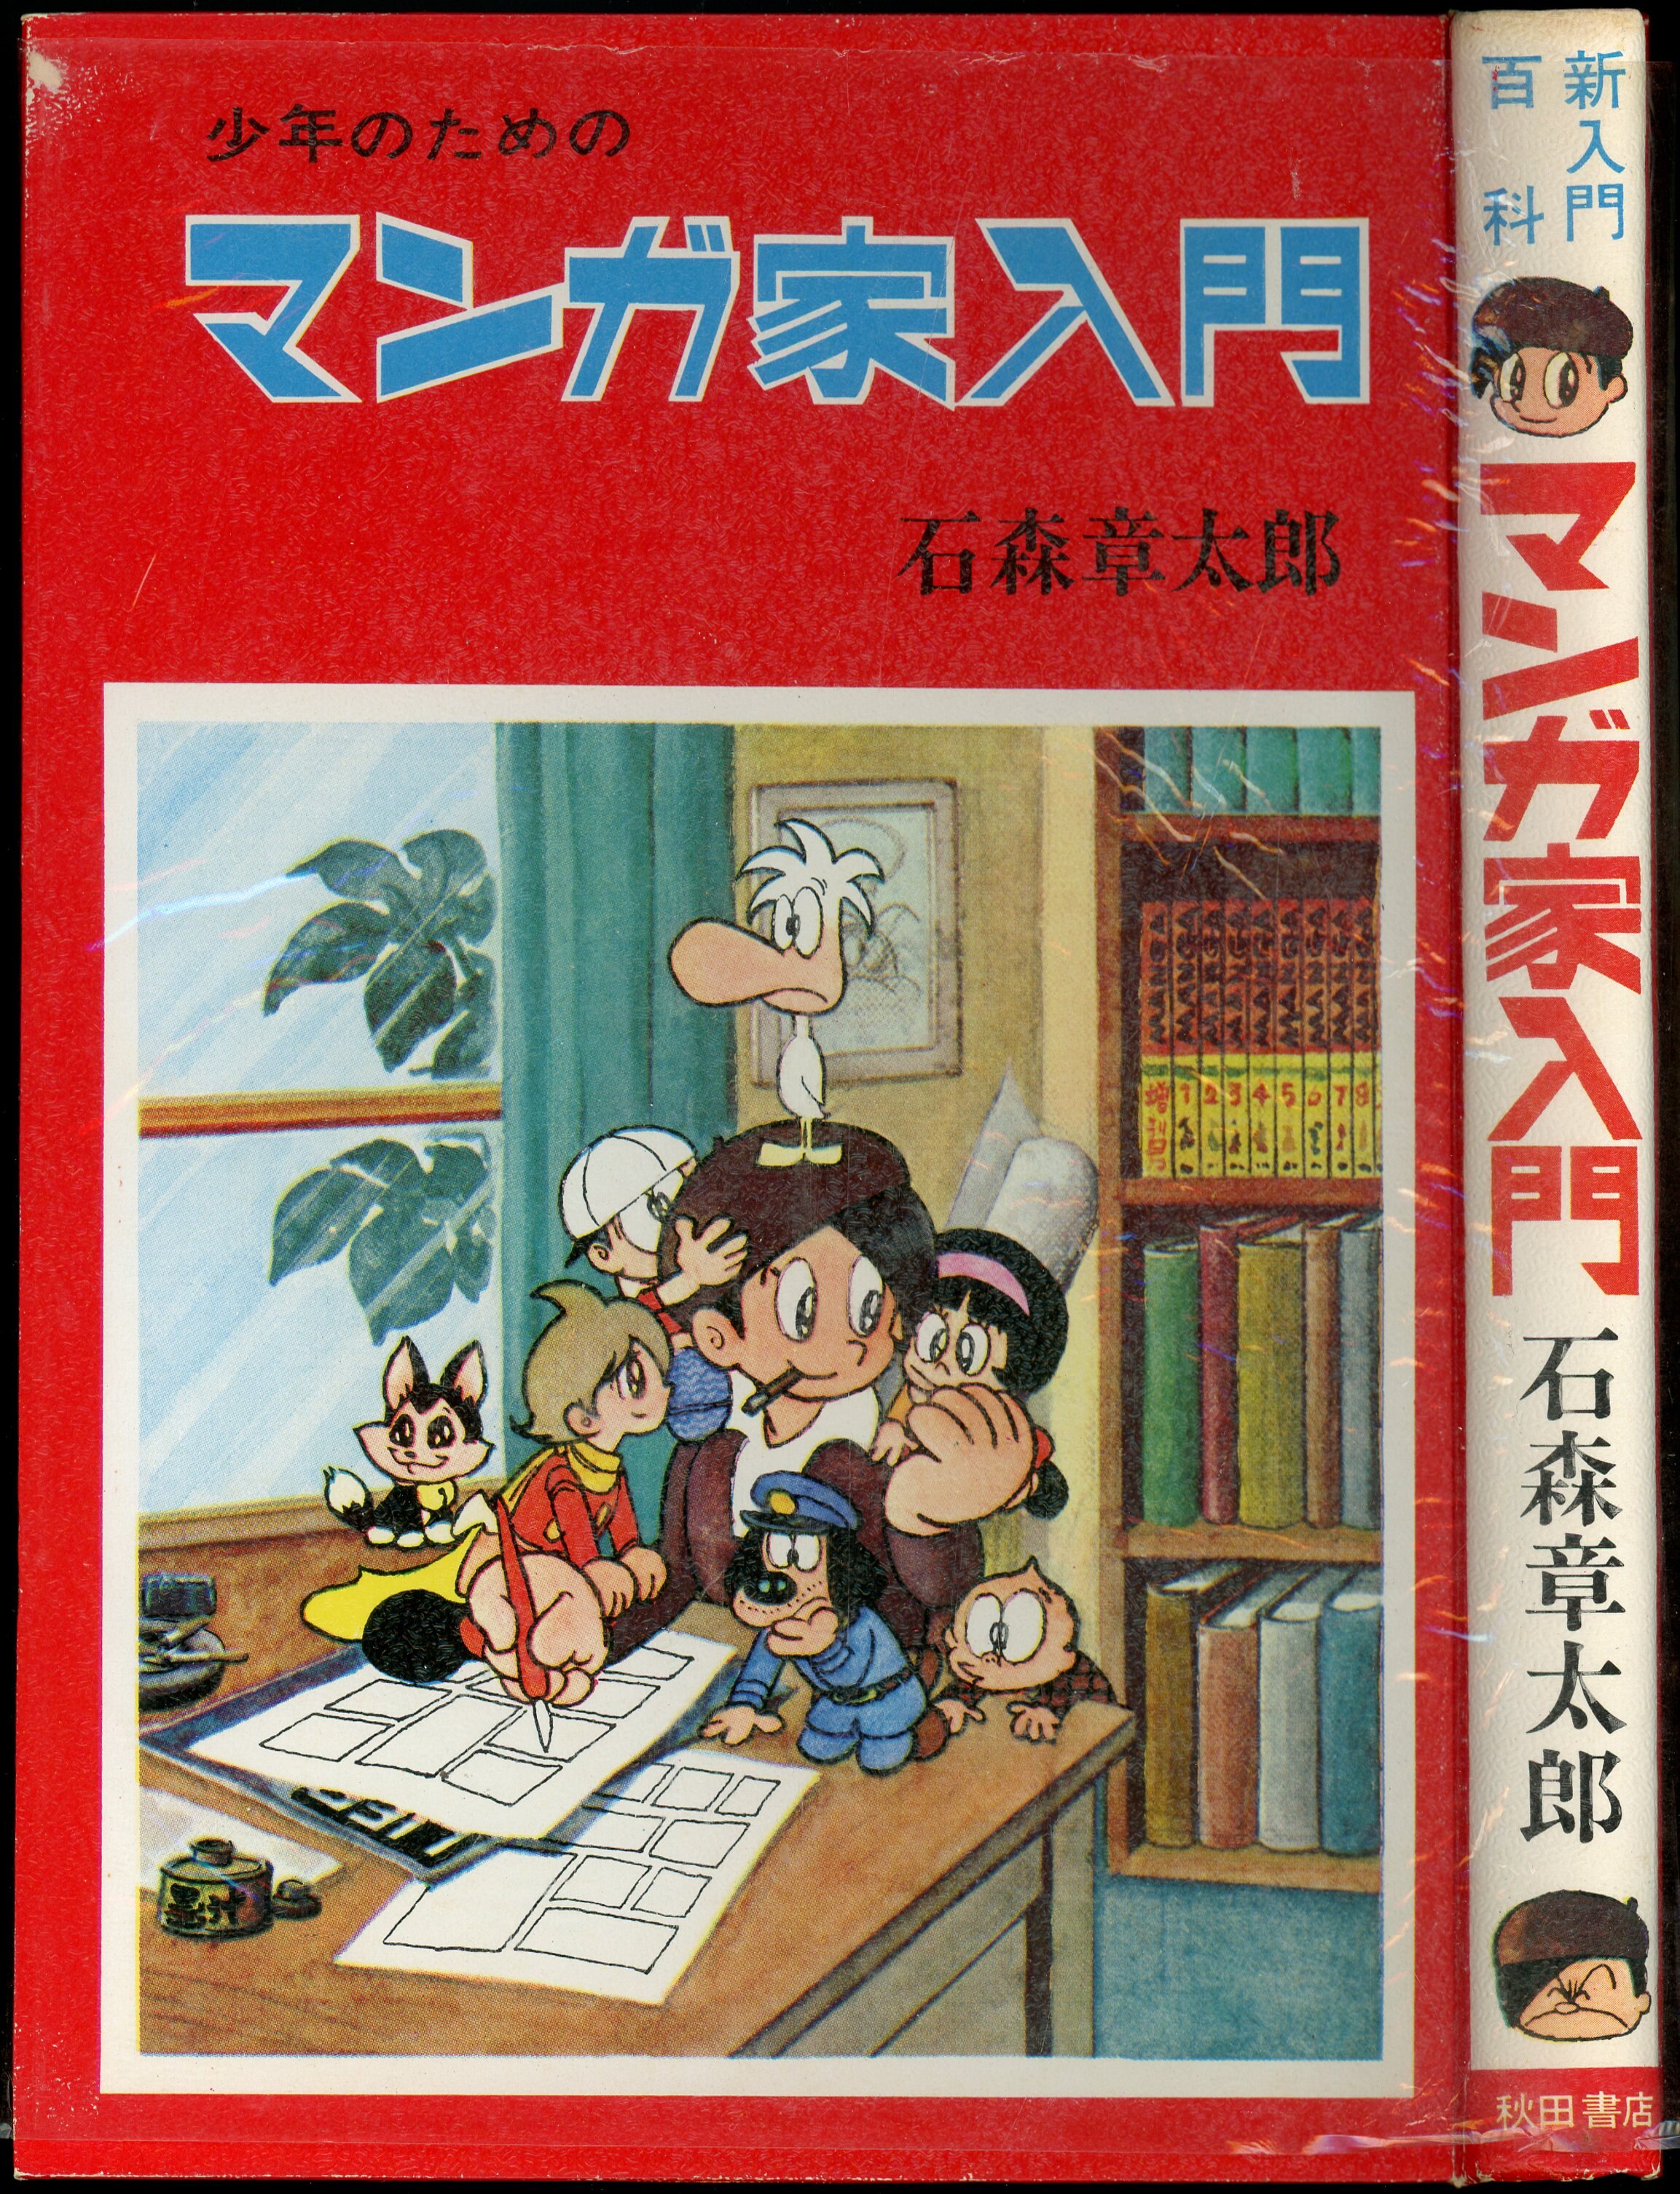 Shotaro Ishinomori's Introduction to Being a Mangaka cover 1